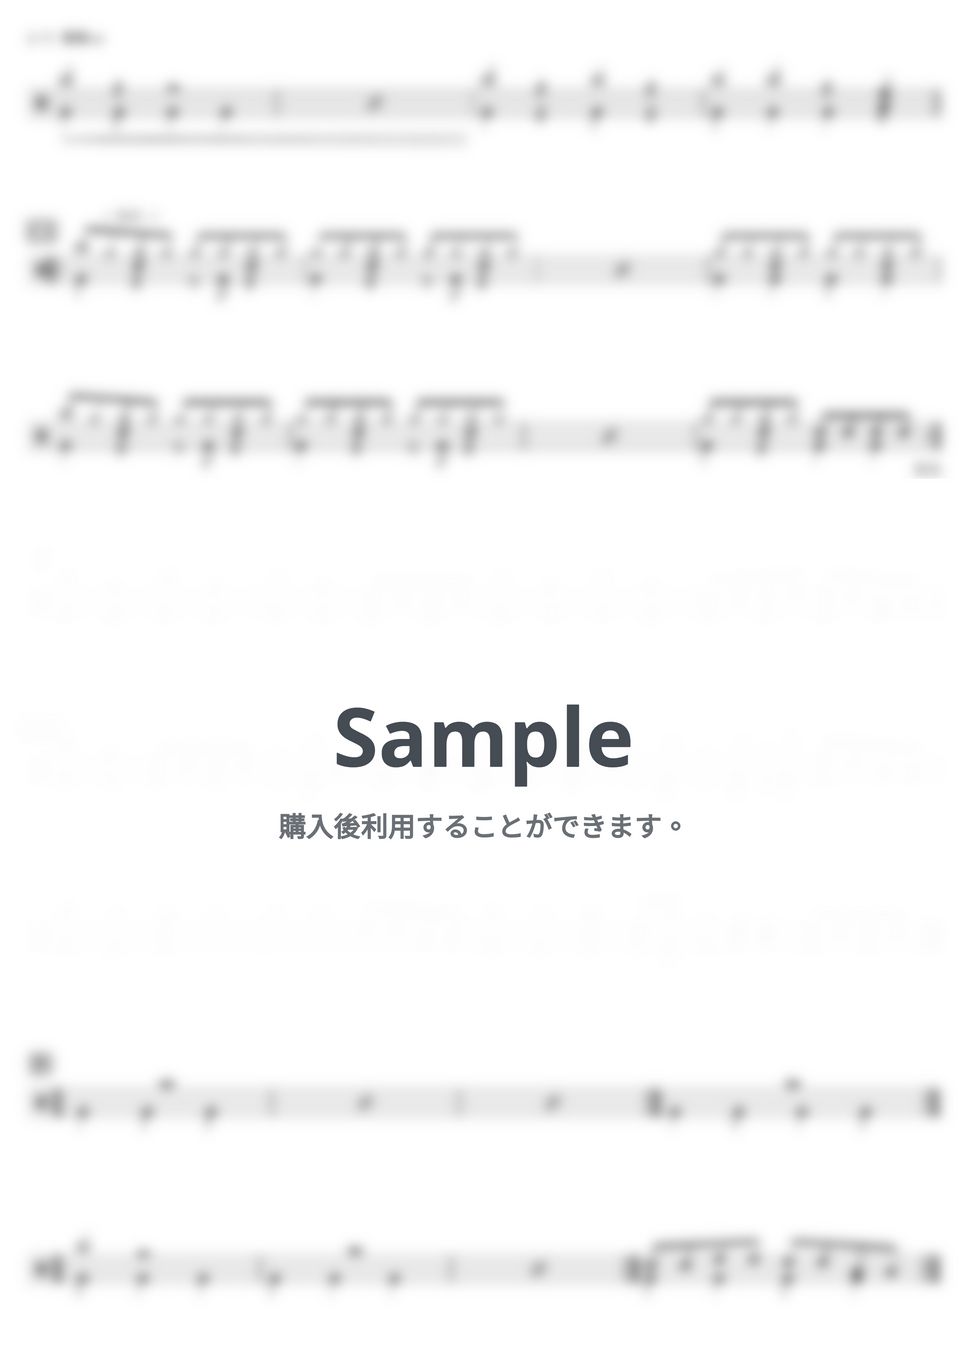 Mrs. GREEN APPLE - ライラック (難易度別セット) by kamishinjo-drum-school